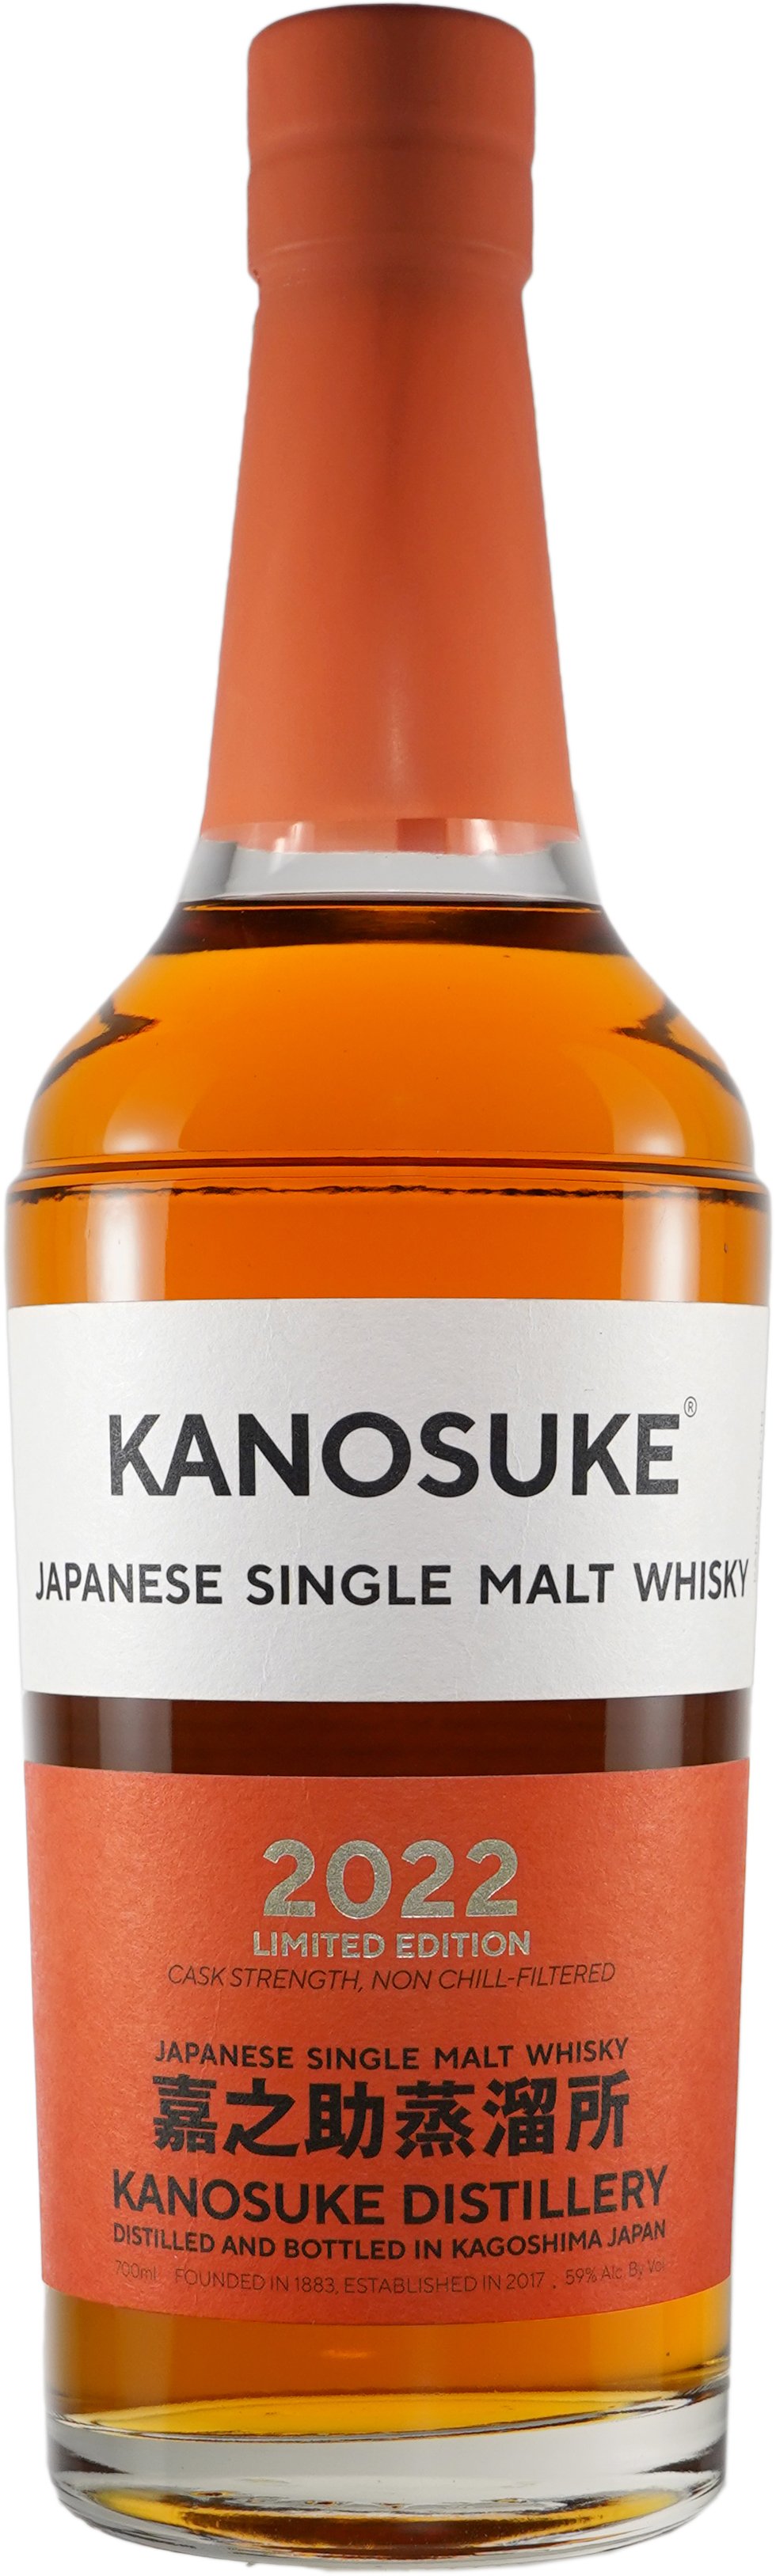 Kanosuke Distillery Limited Edition Japanese Single Malt 2022